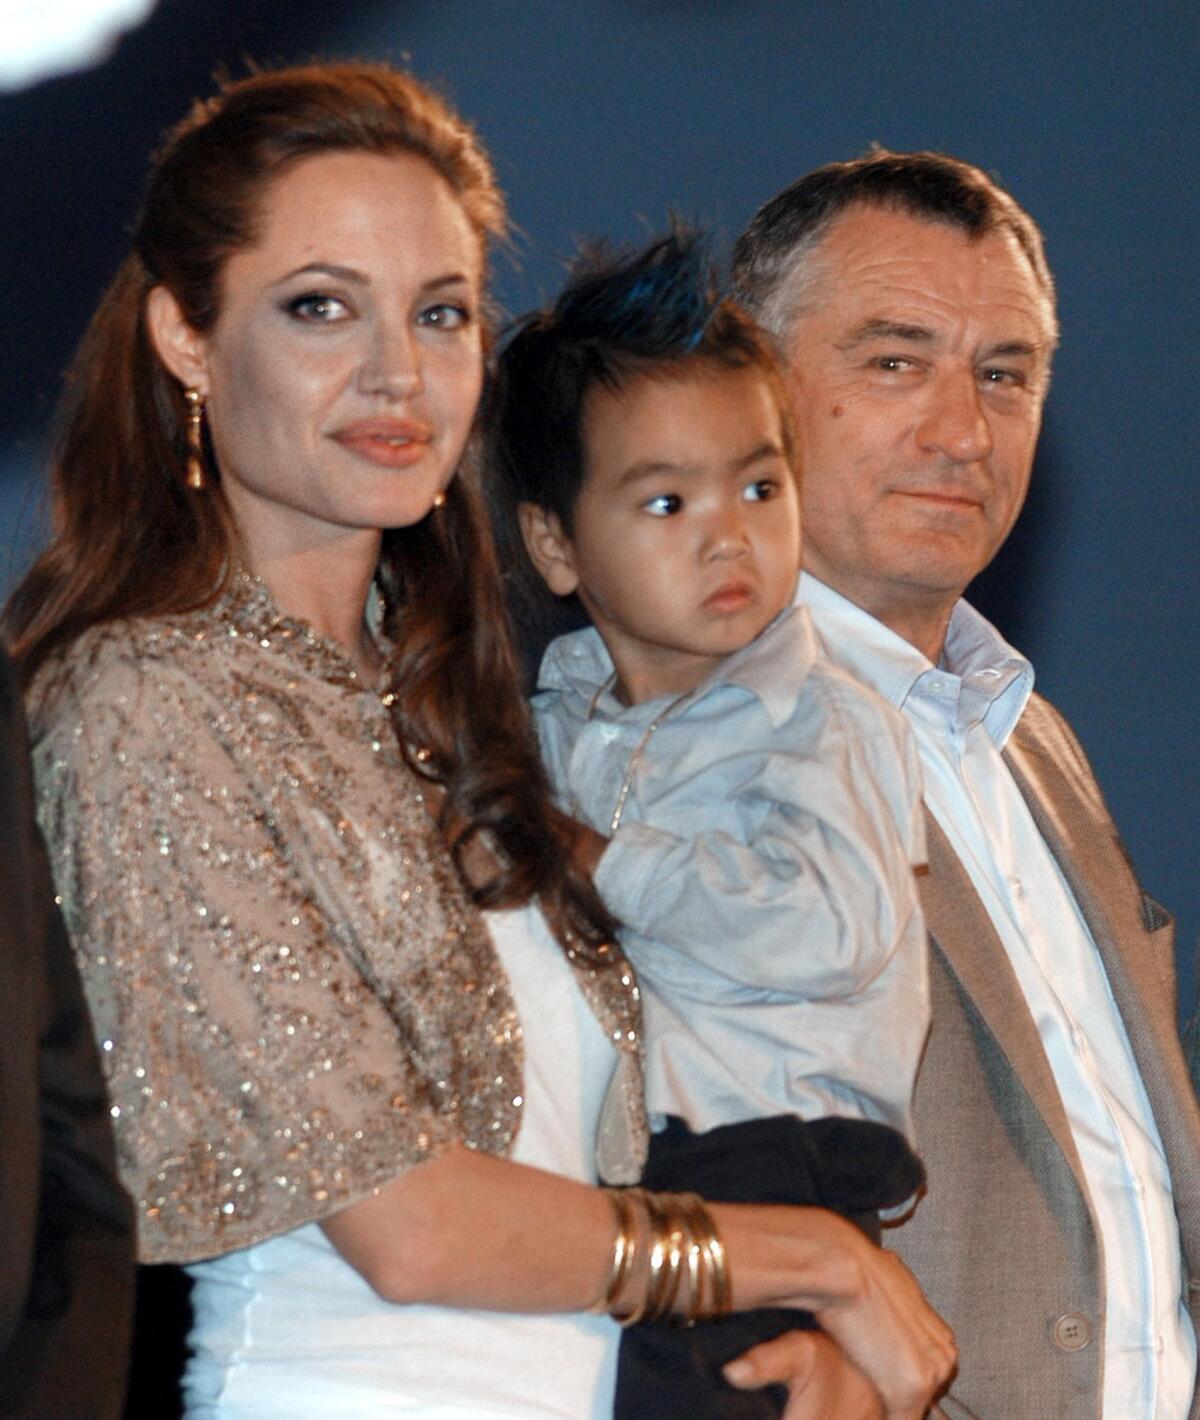 Angelina Jolie cradles her son Maddox alongside actor Robert De Niro at a Sept. 10, 2004, screening of "Shark Tale" at the Venice Film Festival.